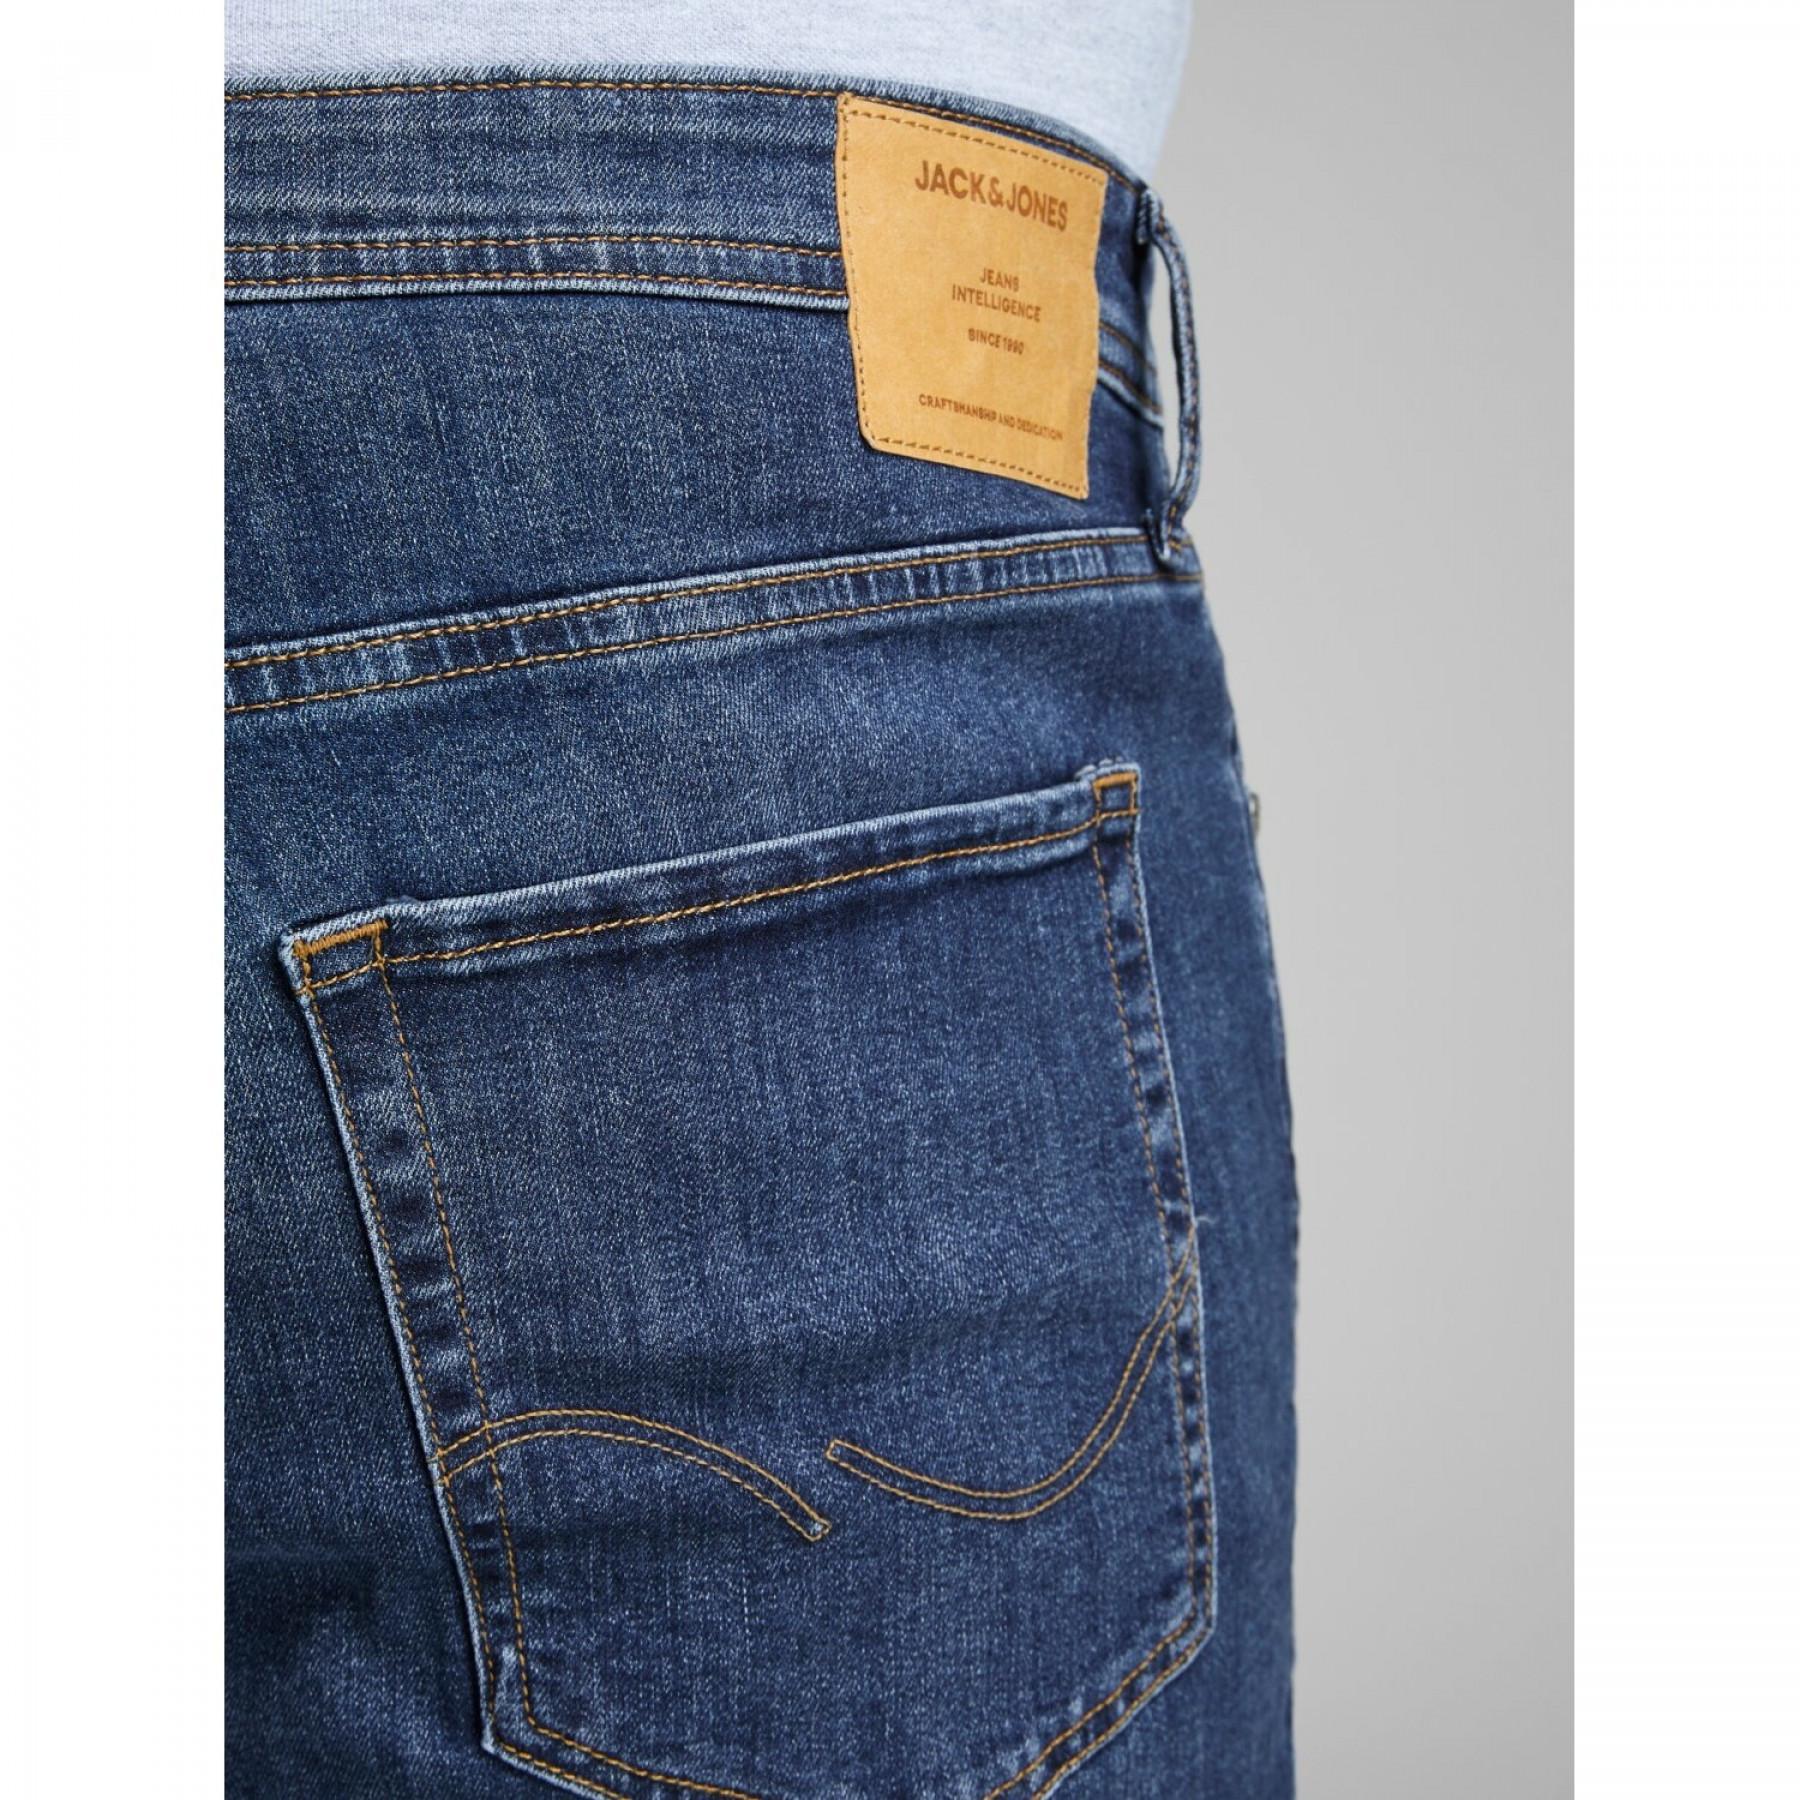 Jeans grande taille Jack & Jones Tim Original 814